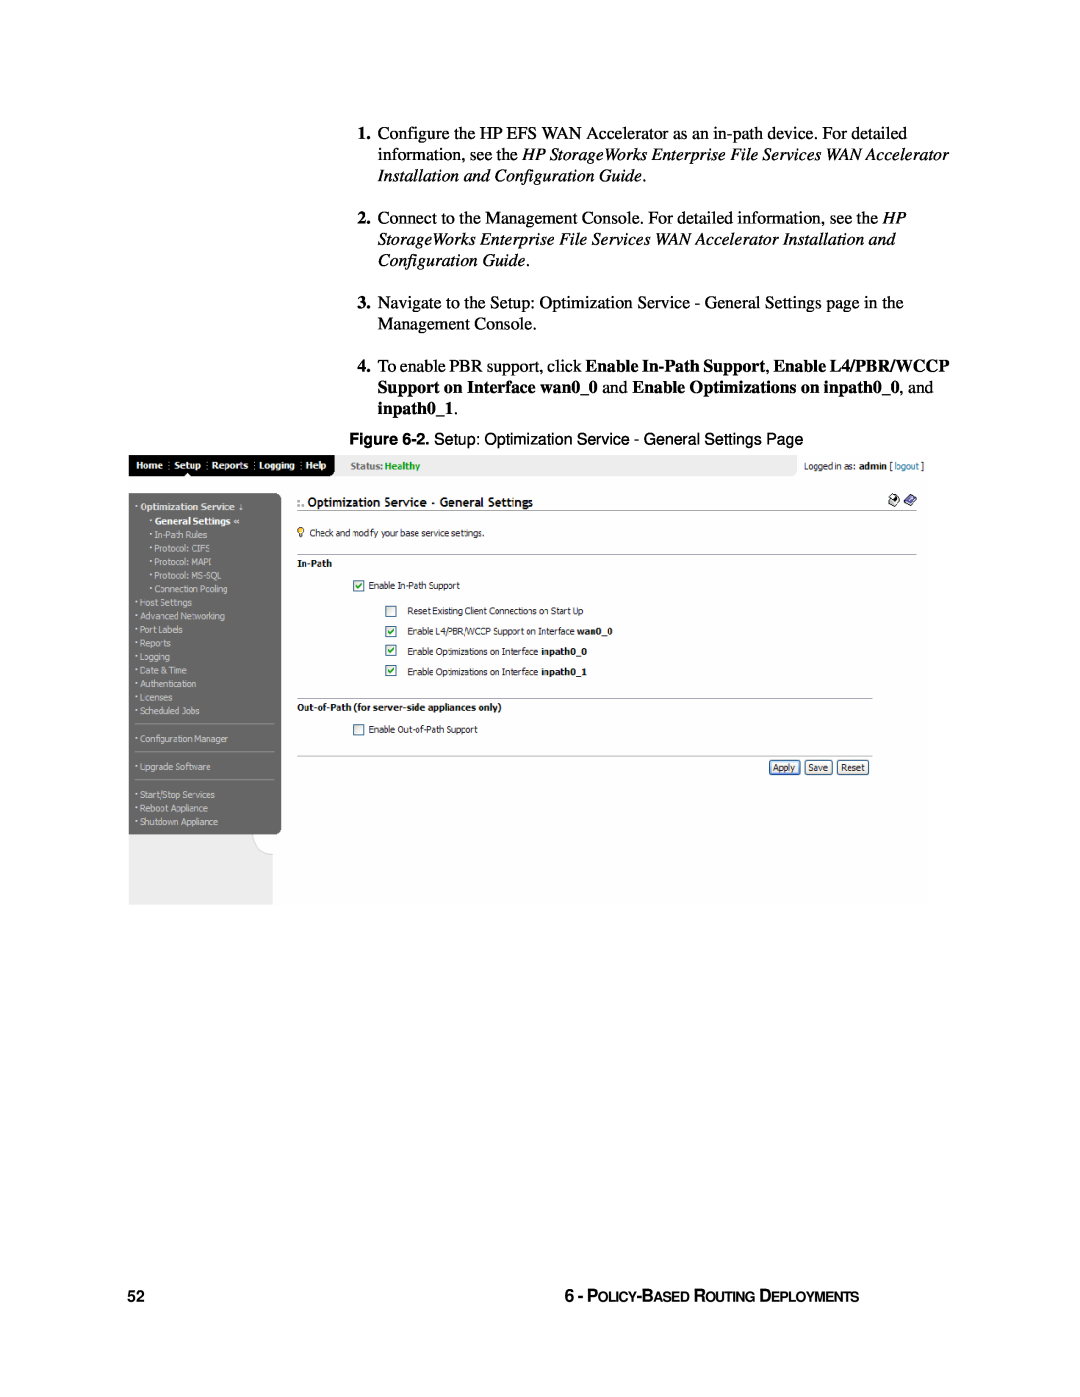 HP Enterprise File Services WAN Accelerator manual 2. Setup Optimization Service - General Settings Page 